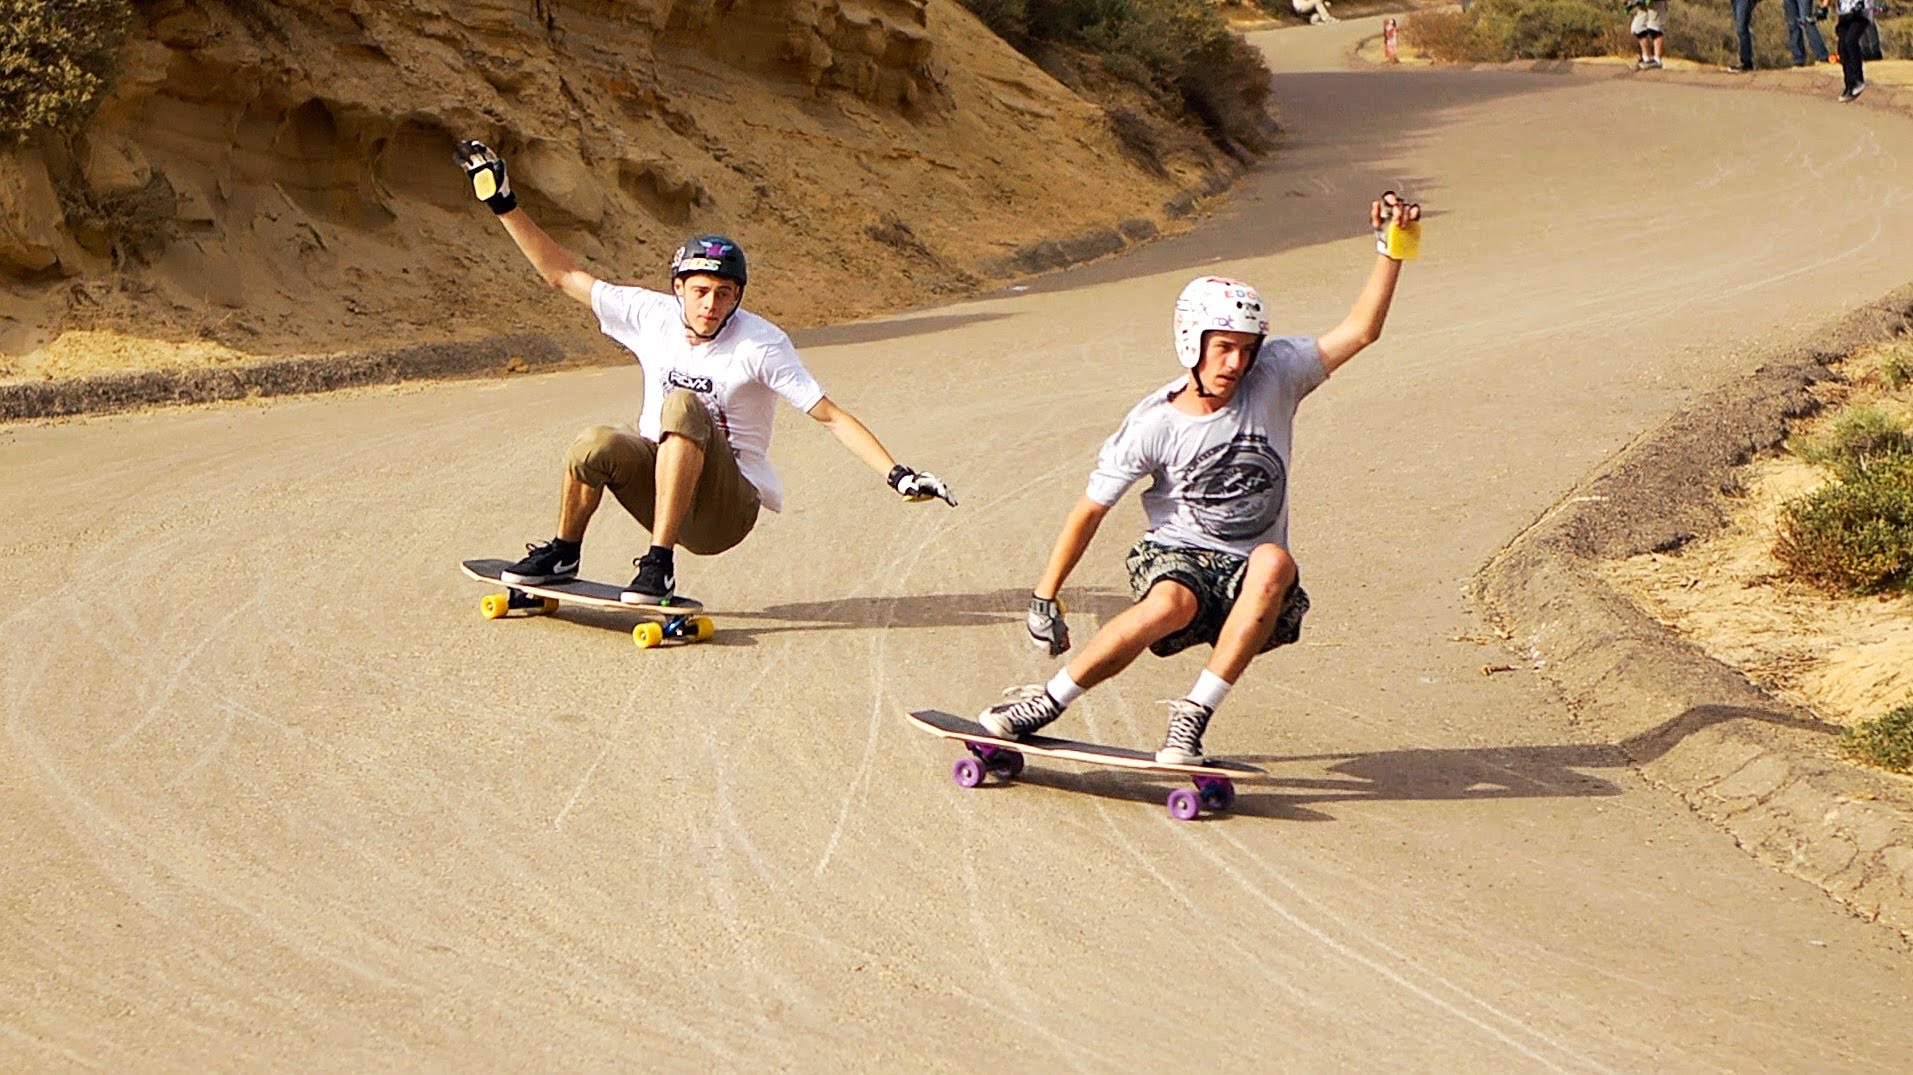 Downhill Skateboard Tricks1 